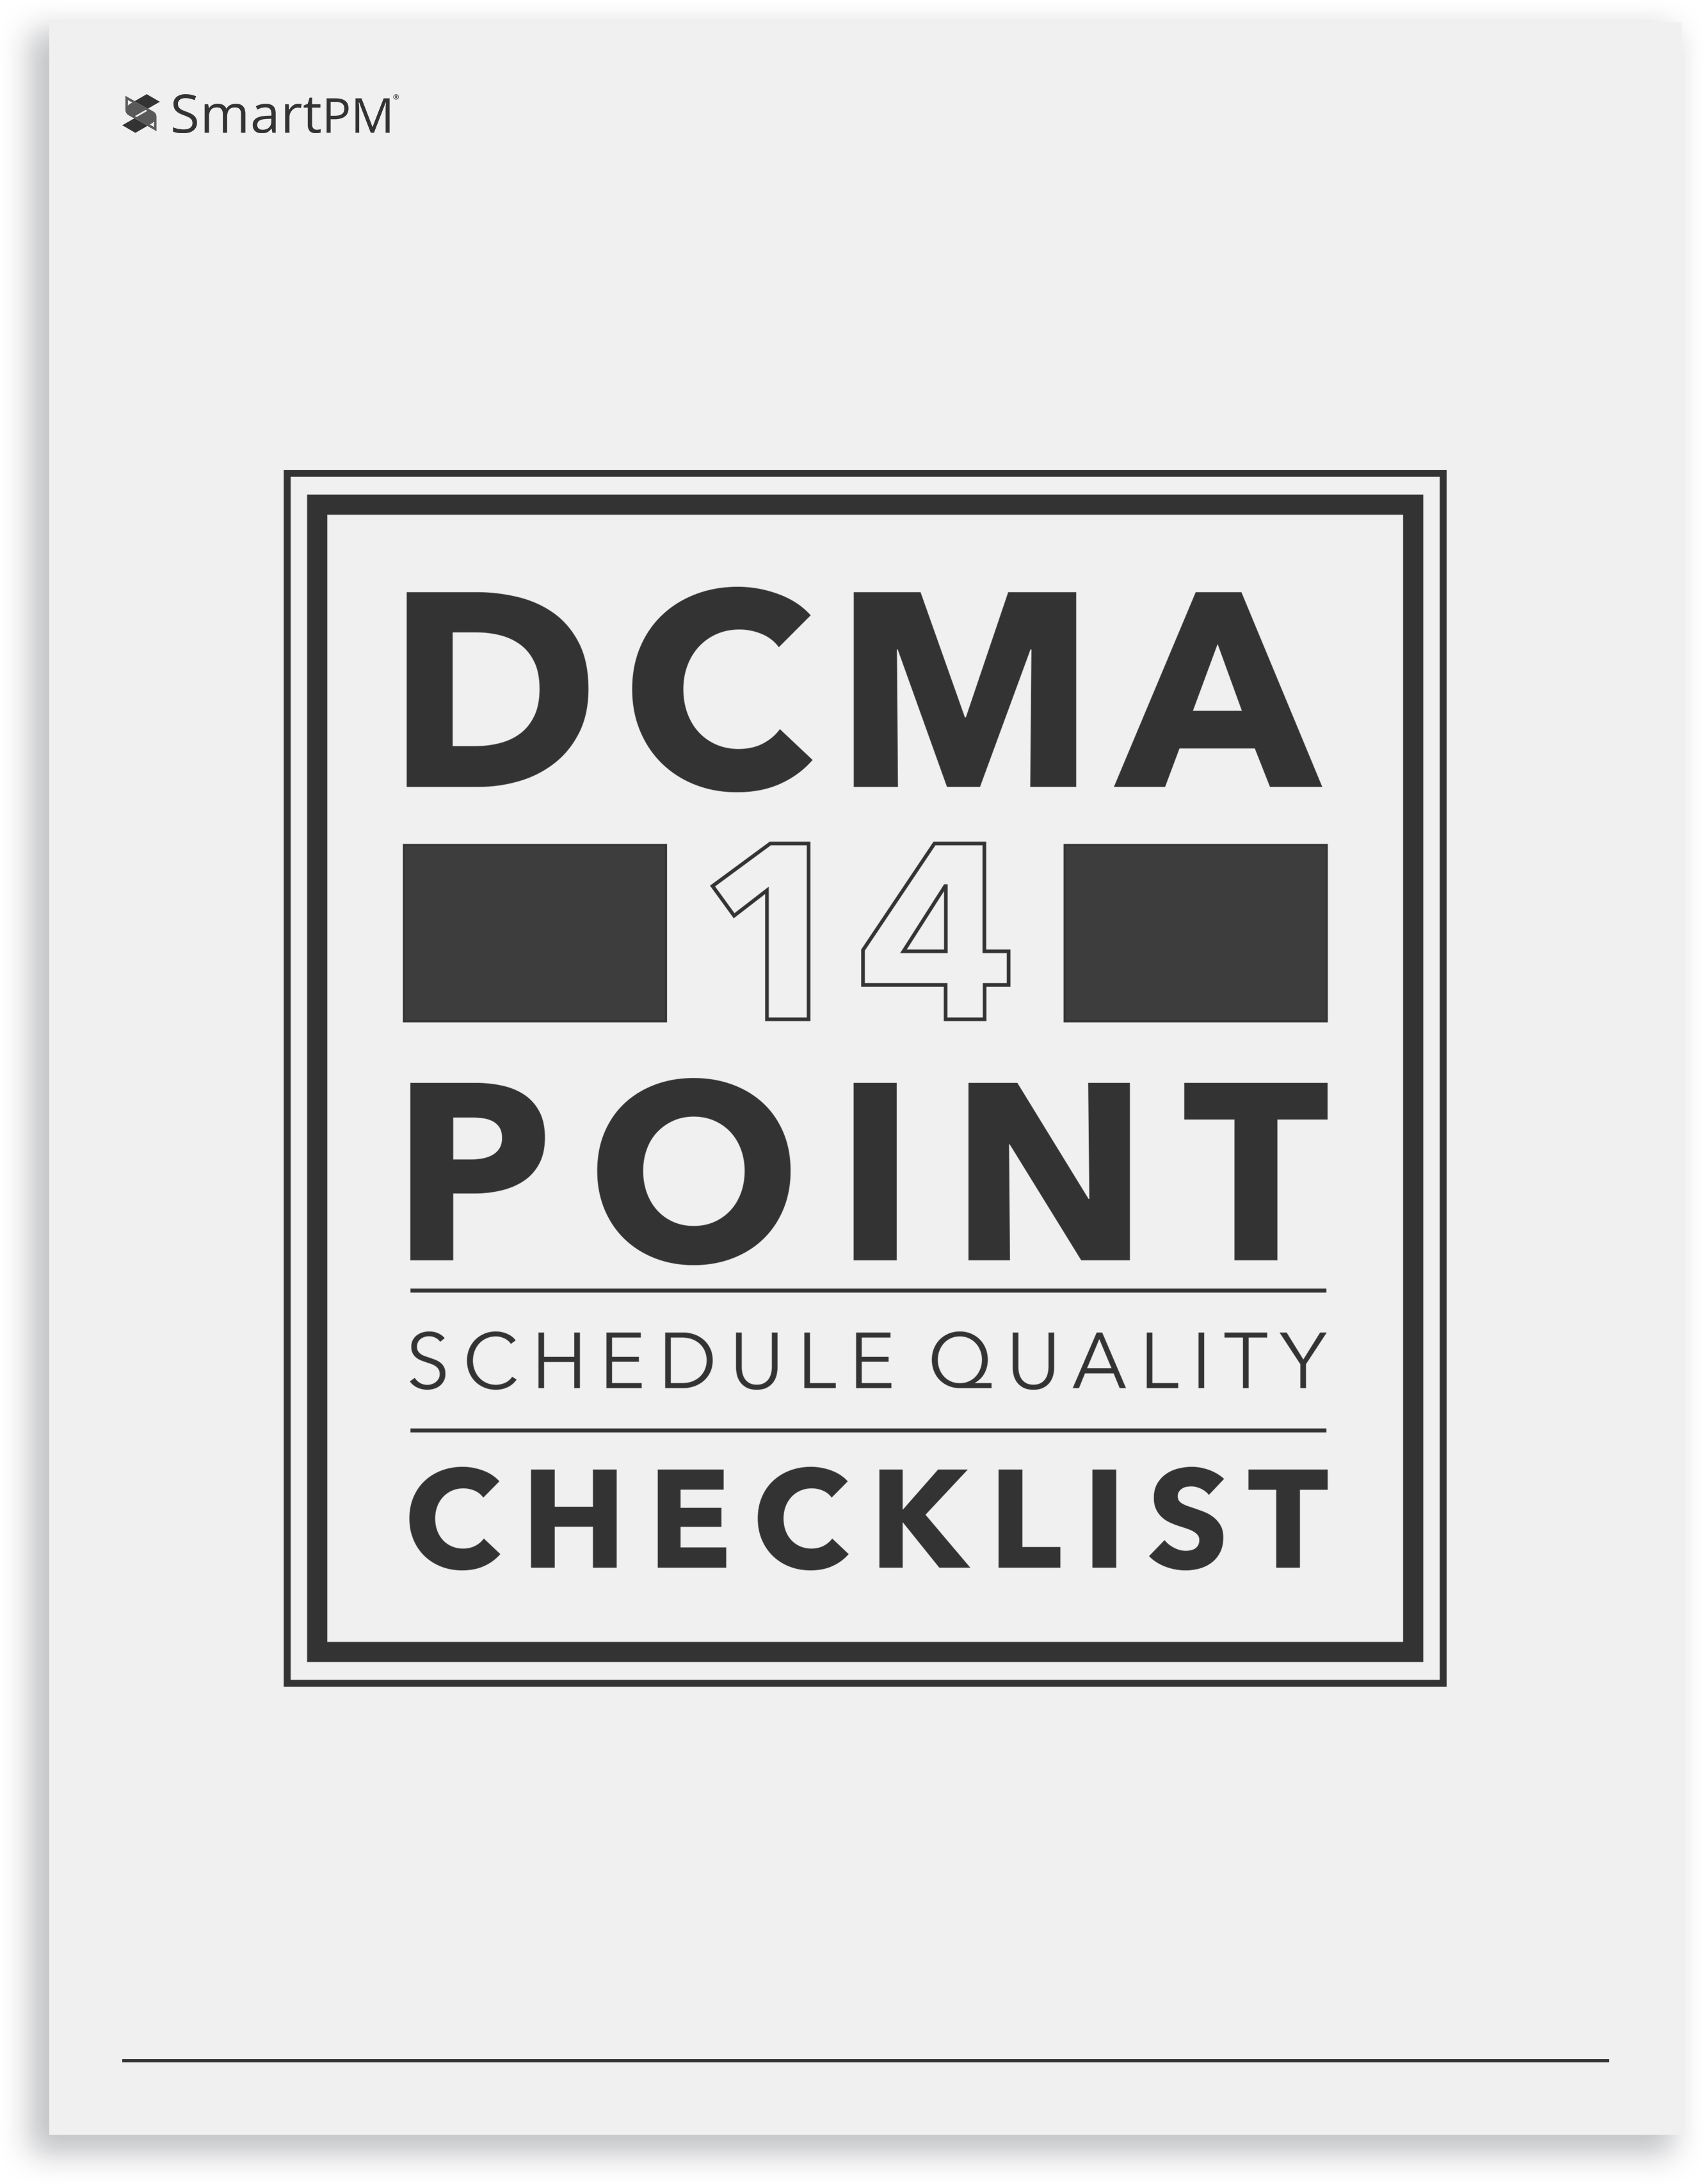 DMCA-schedule-quality-checklist-thumbnail2